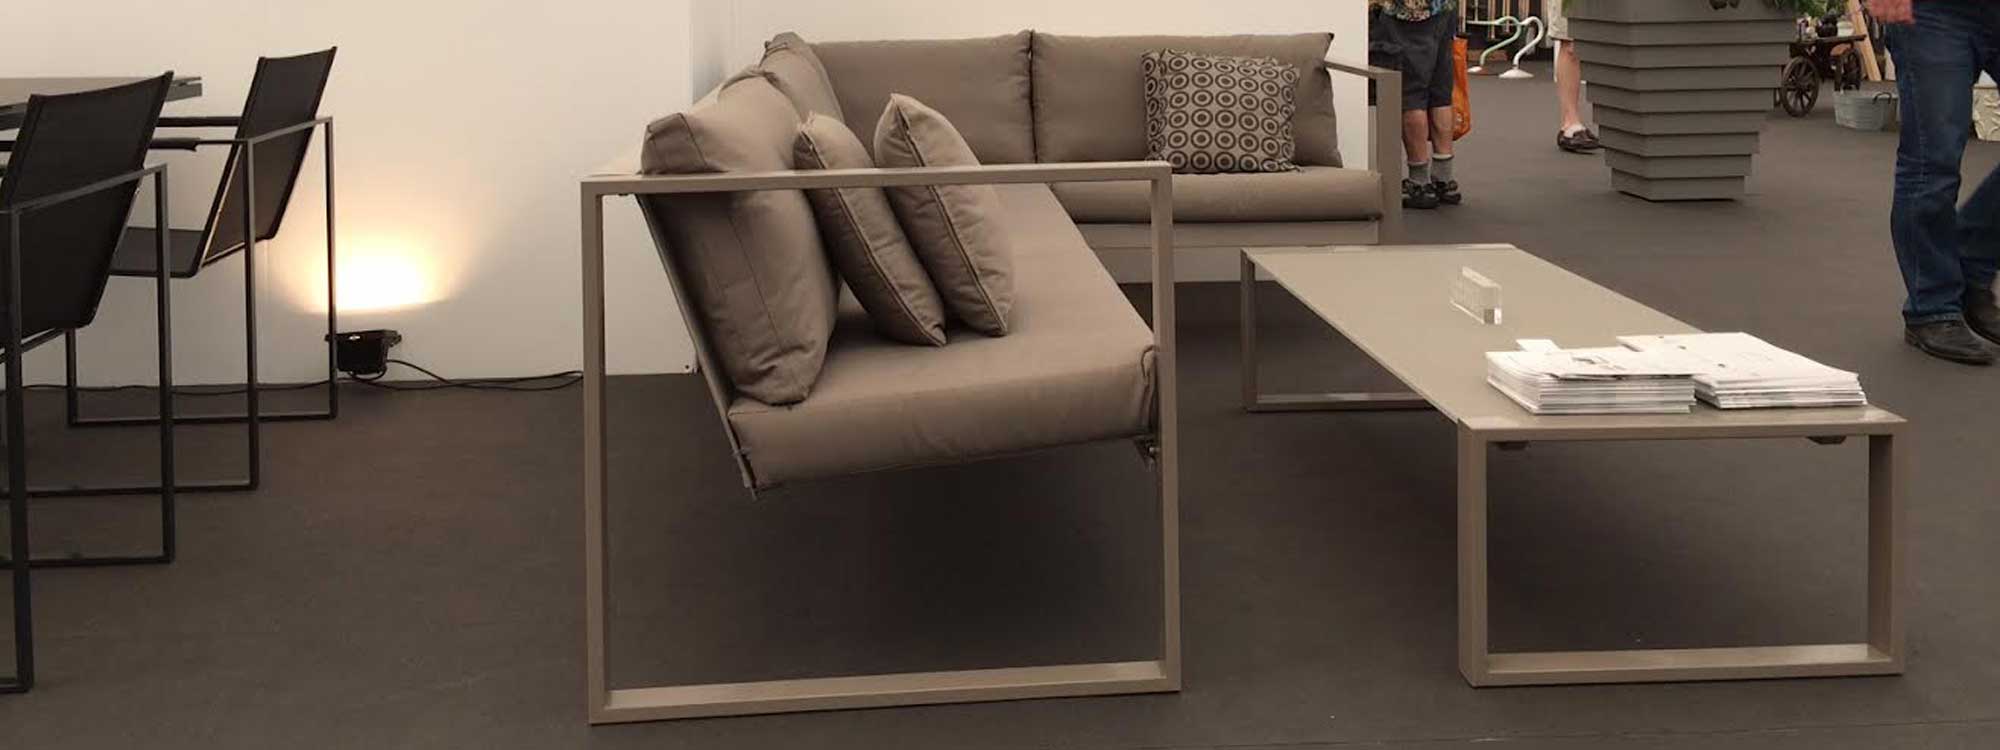 Image of FueraDentro Cima Lounge minimalist garden sofa, shown at Grow London exhibition in Hampstead, London